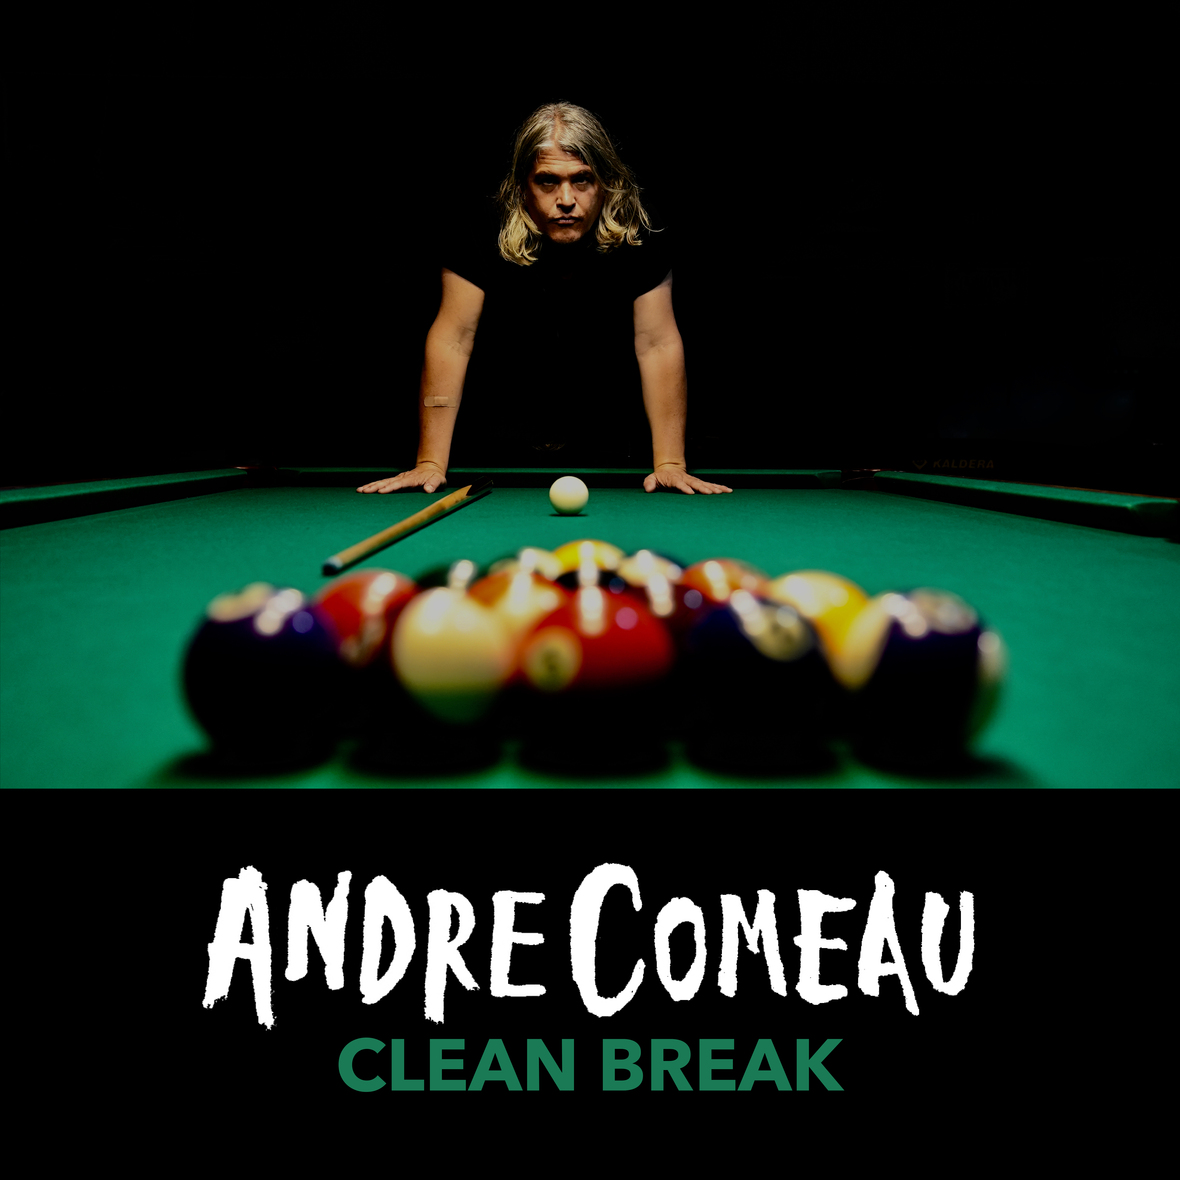 Andre Comeau - "Clean Break"